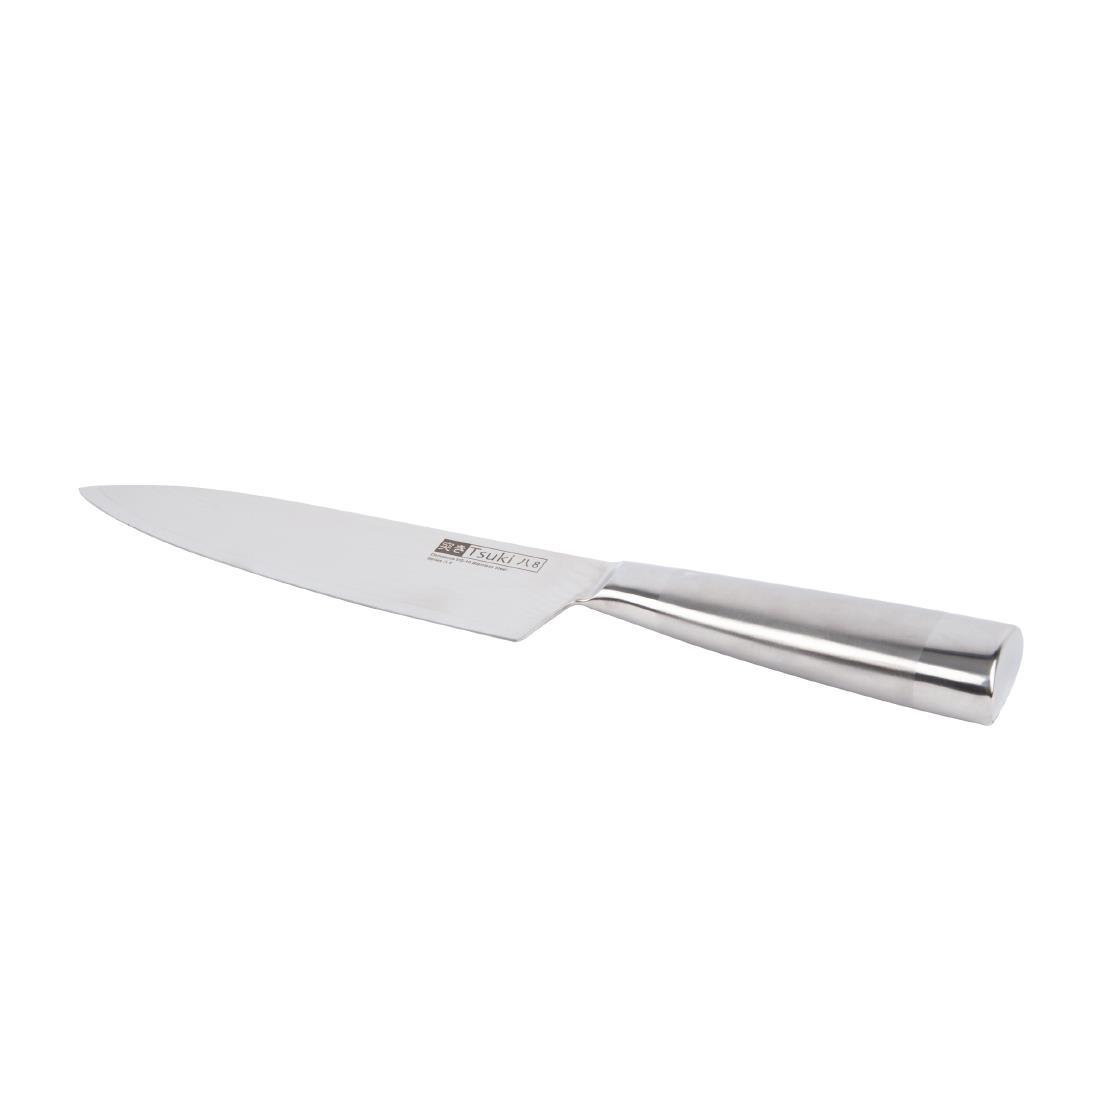 Vogue Tsuki Series 8 Chef Knife 20cm - DA440  - 4